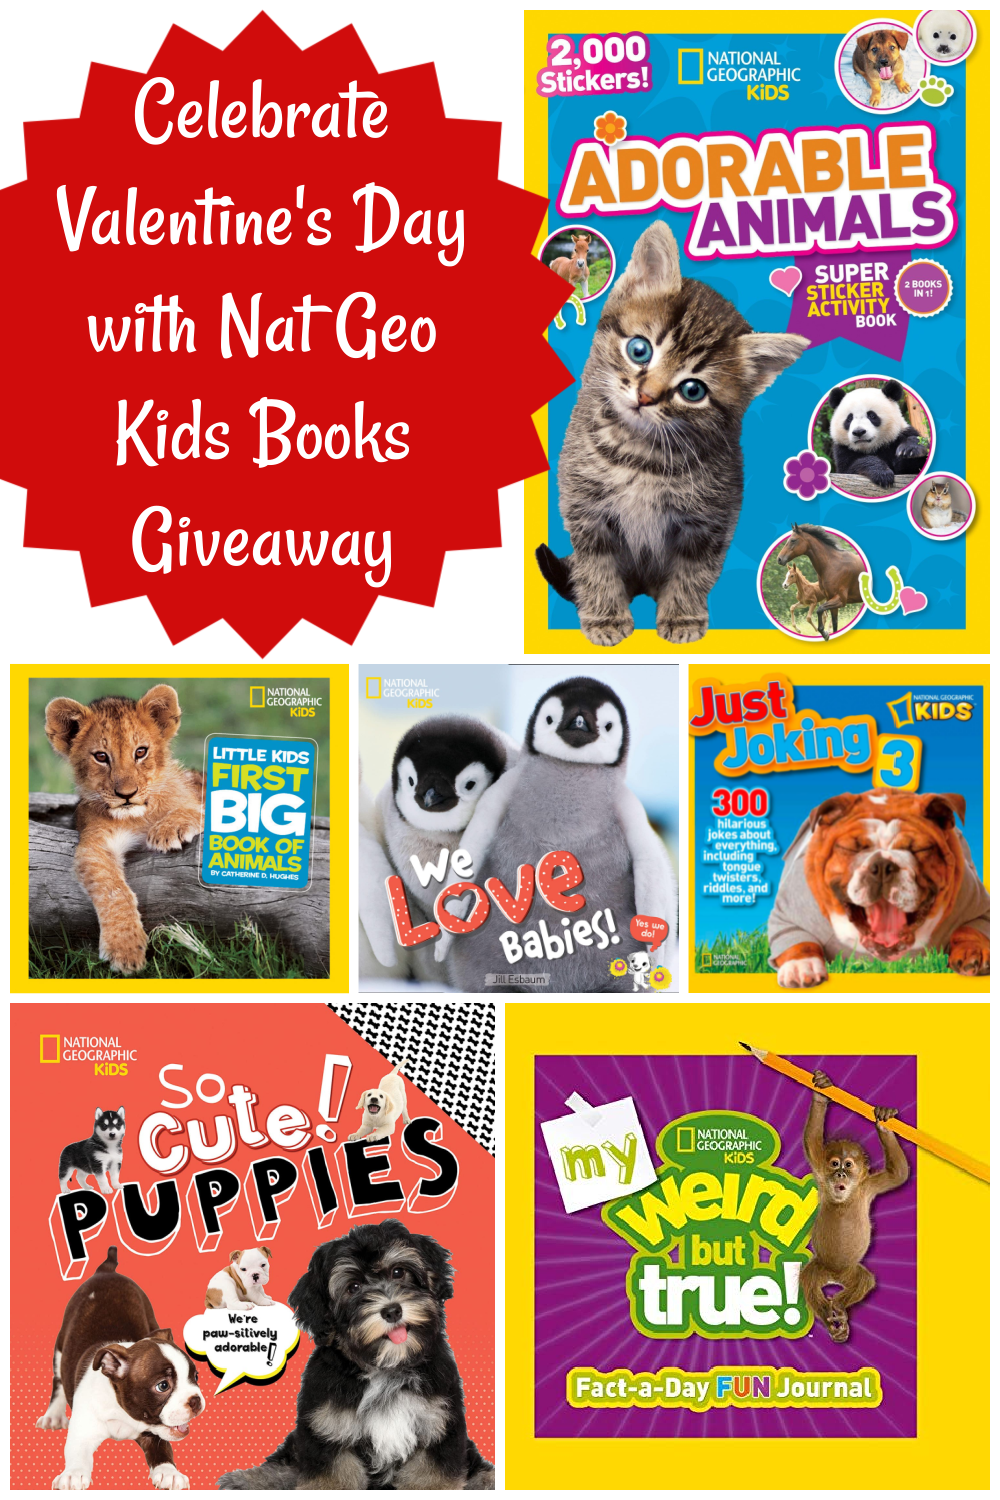 Celebrate Valentine's Day with Nat Geo Kids Books